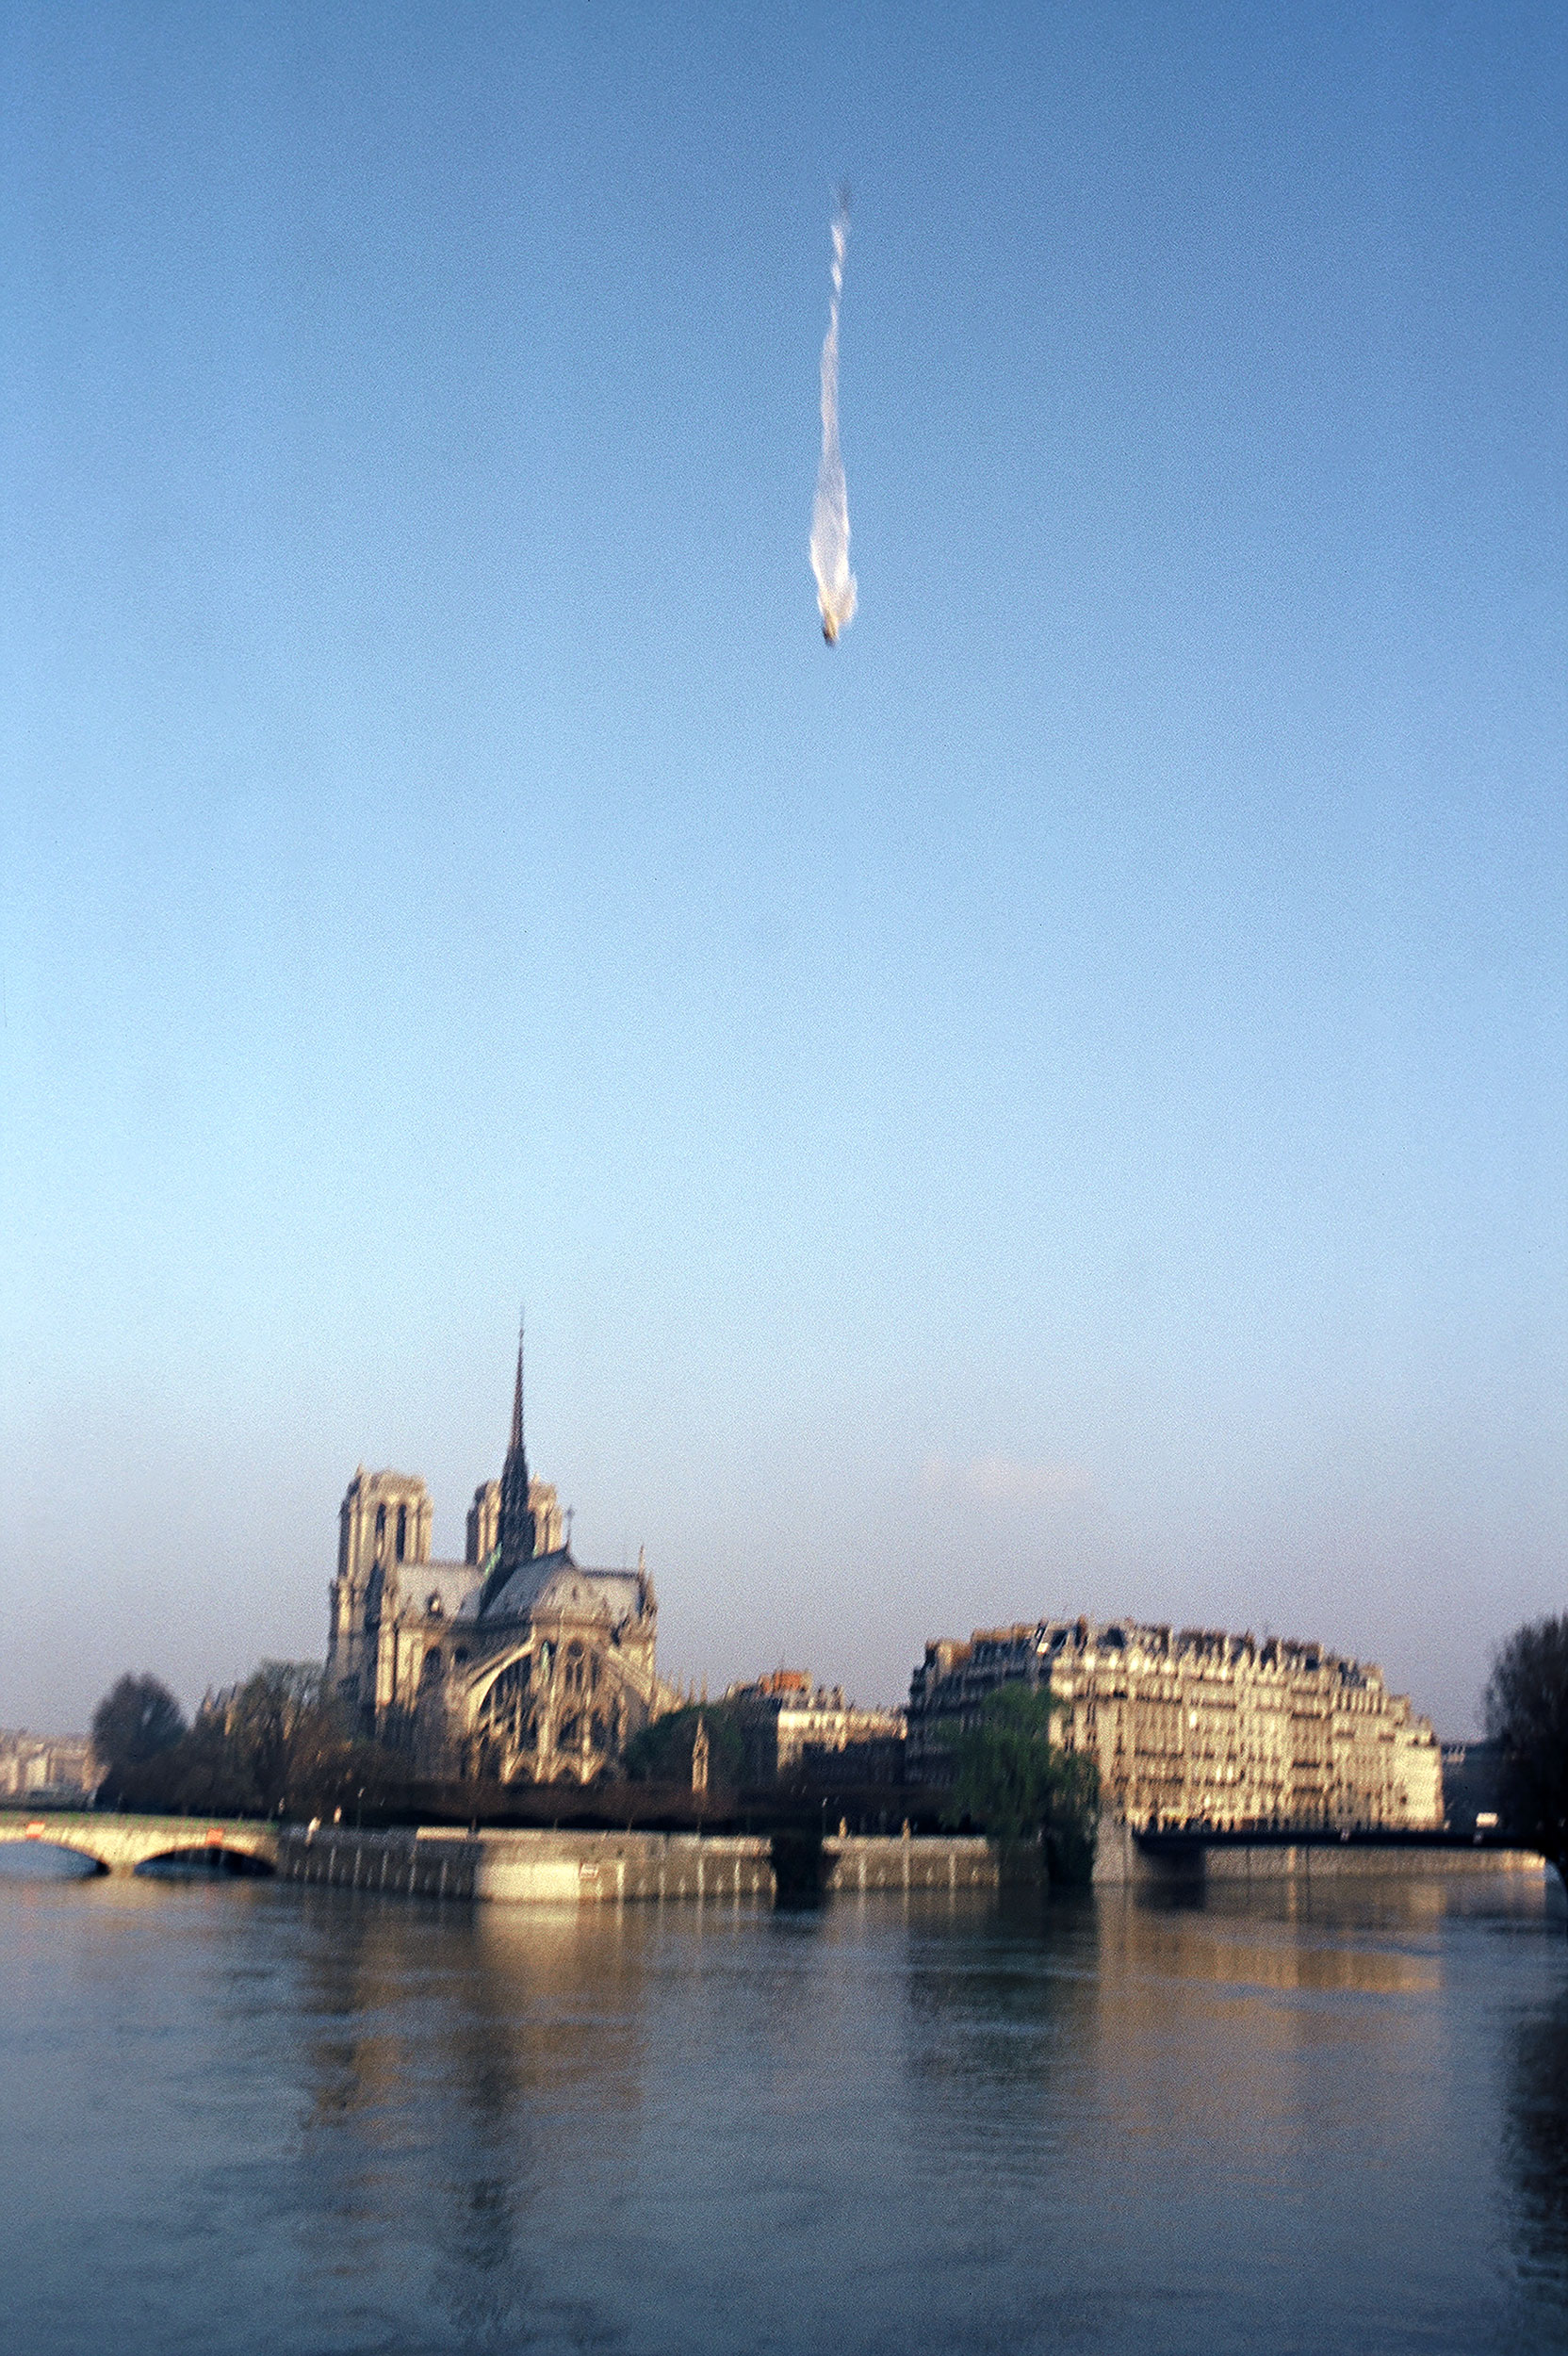 To the Seine River, Paris, France